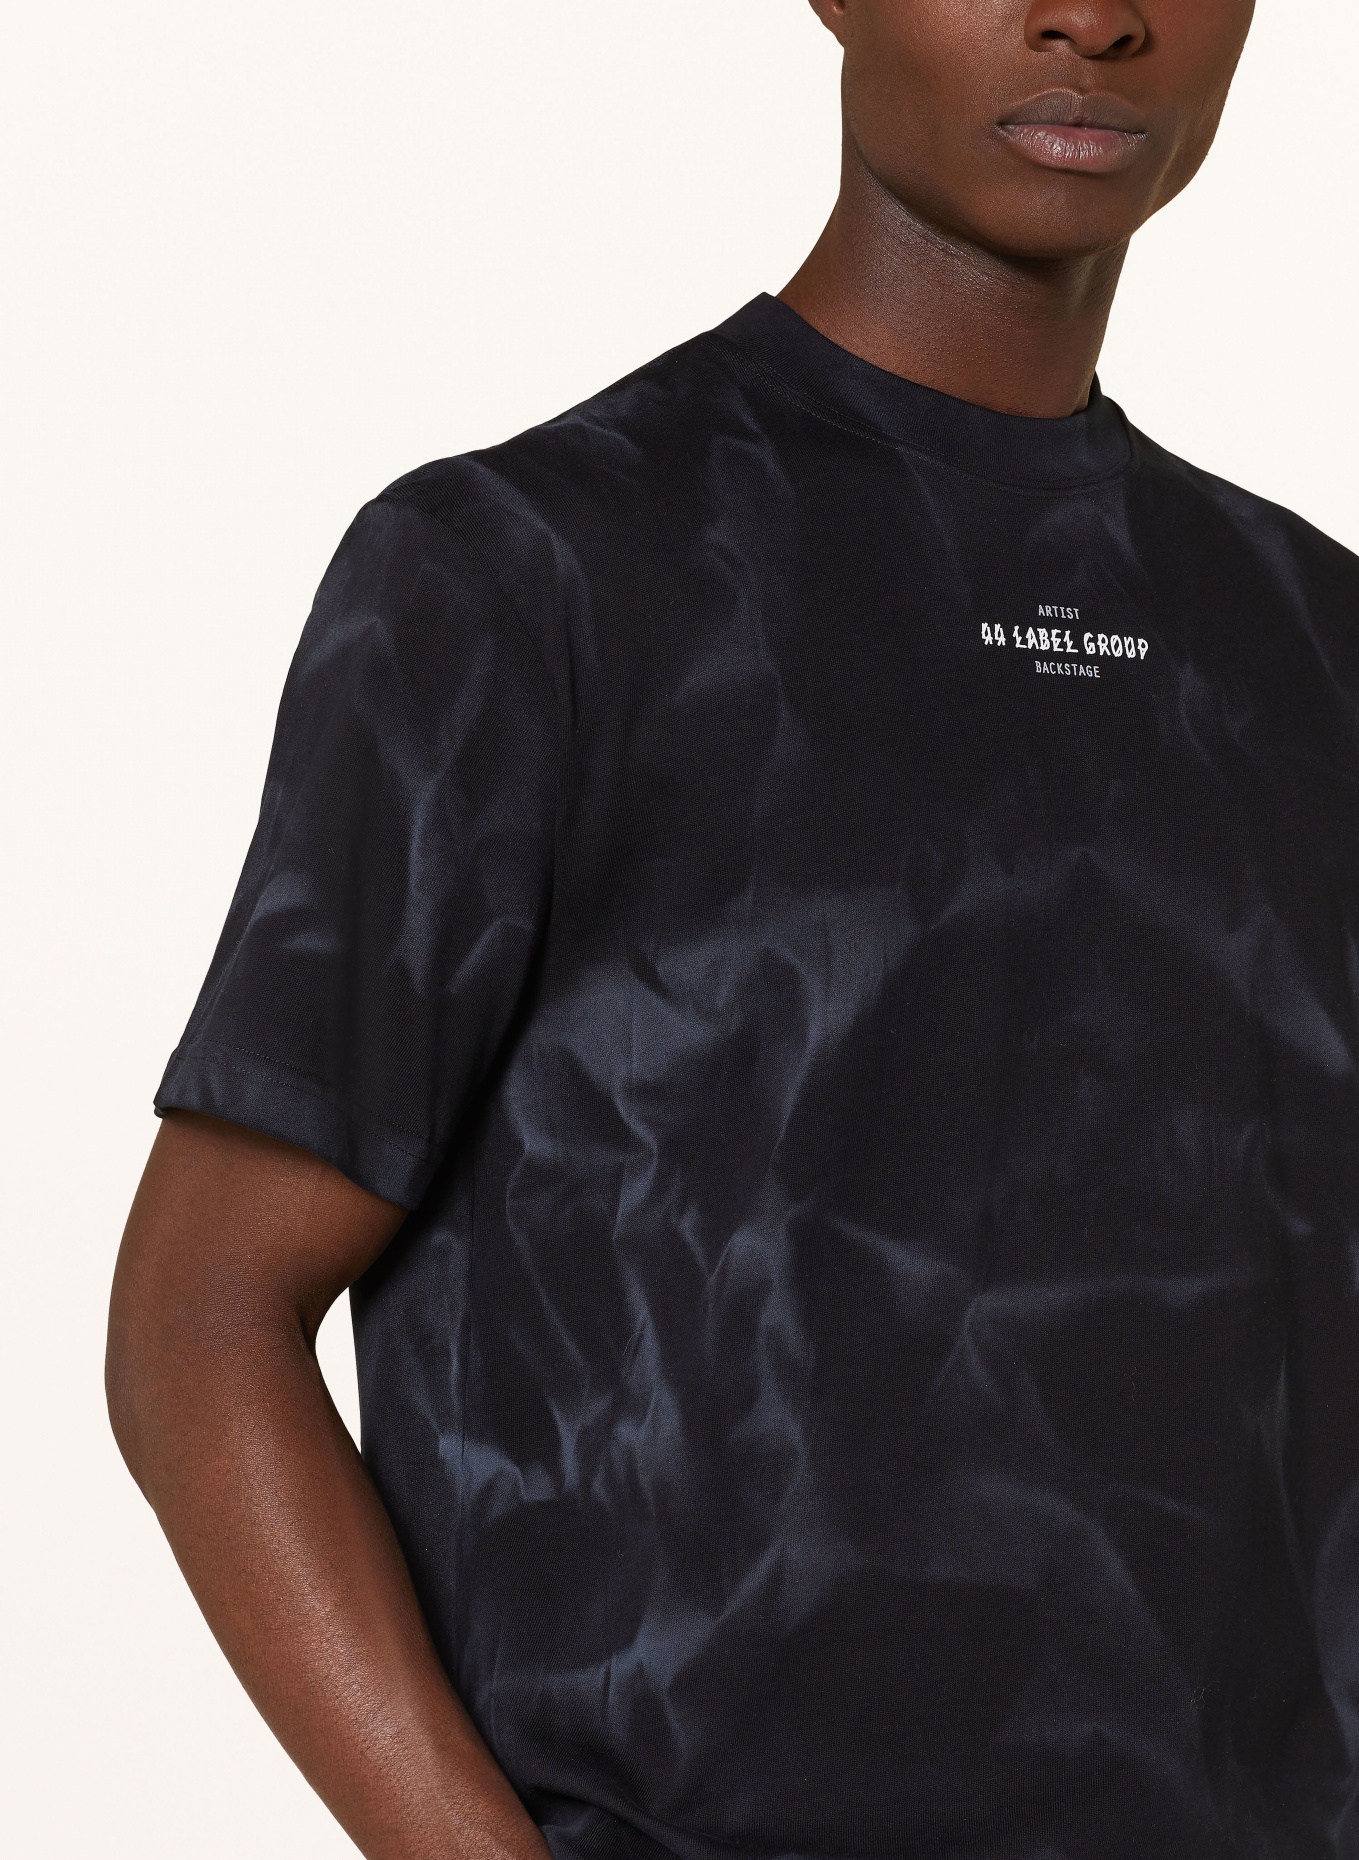 44 LABEL GROUP T-shirt, Color: BLACK/ GRAY (Image 4)